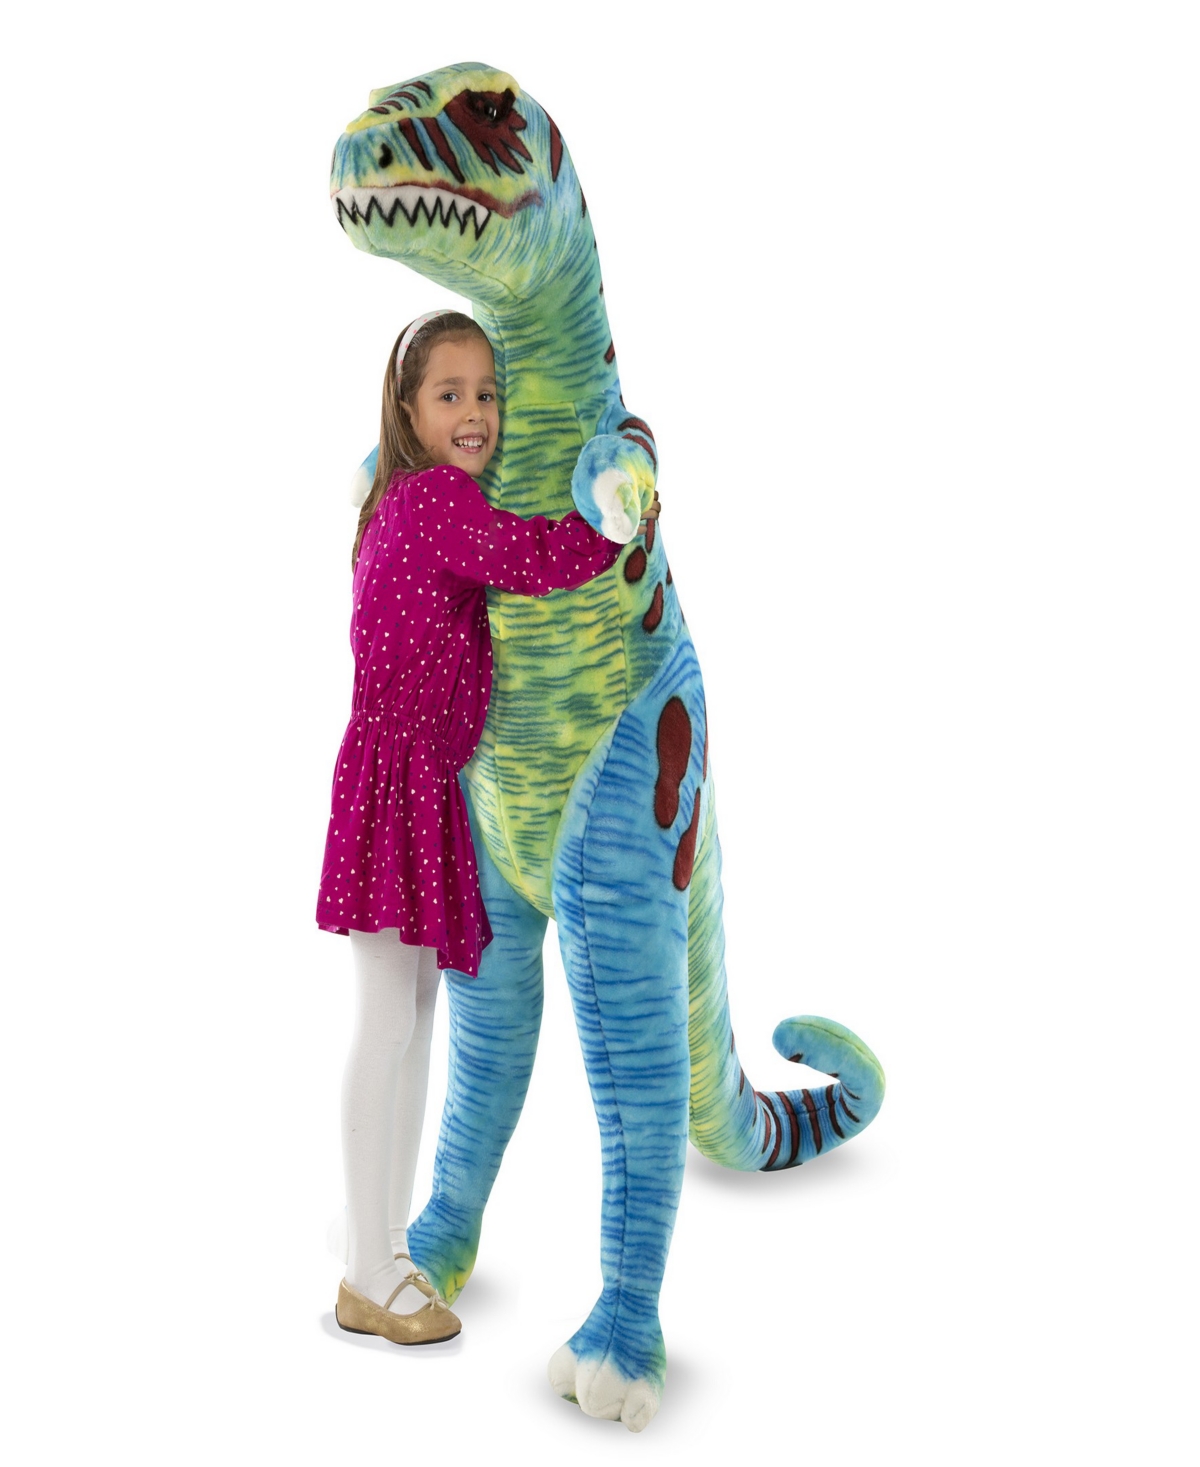 Melissa & Doug Kids'  Jumbo Trex Dinosaur Lifelike Stuffed Animal (over 4 Feet Tall) In Multi